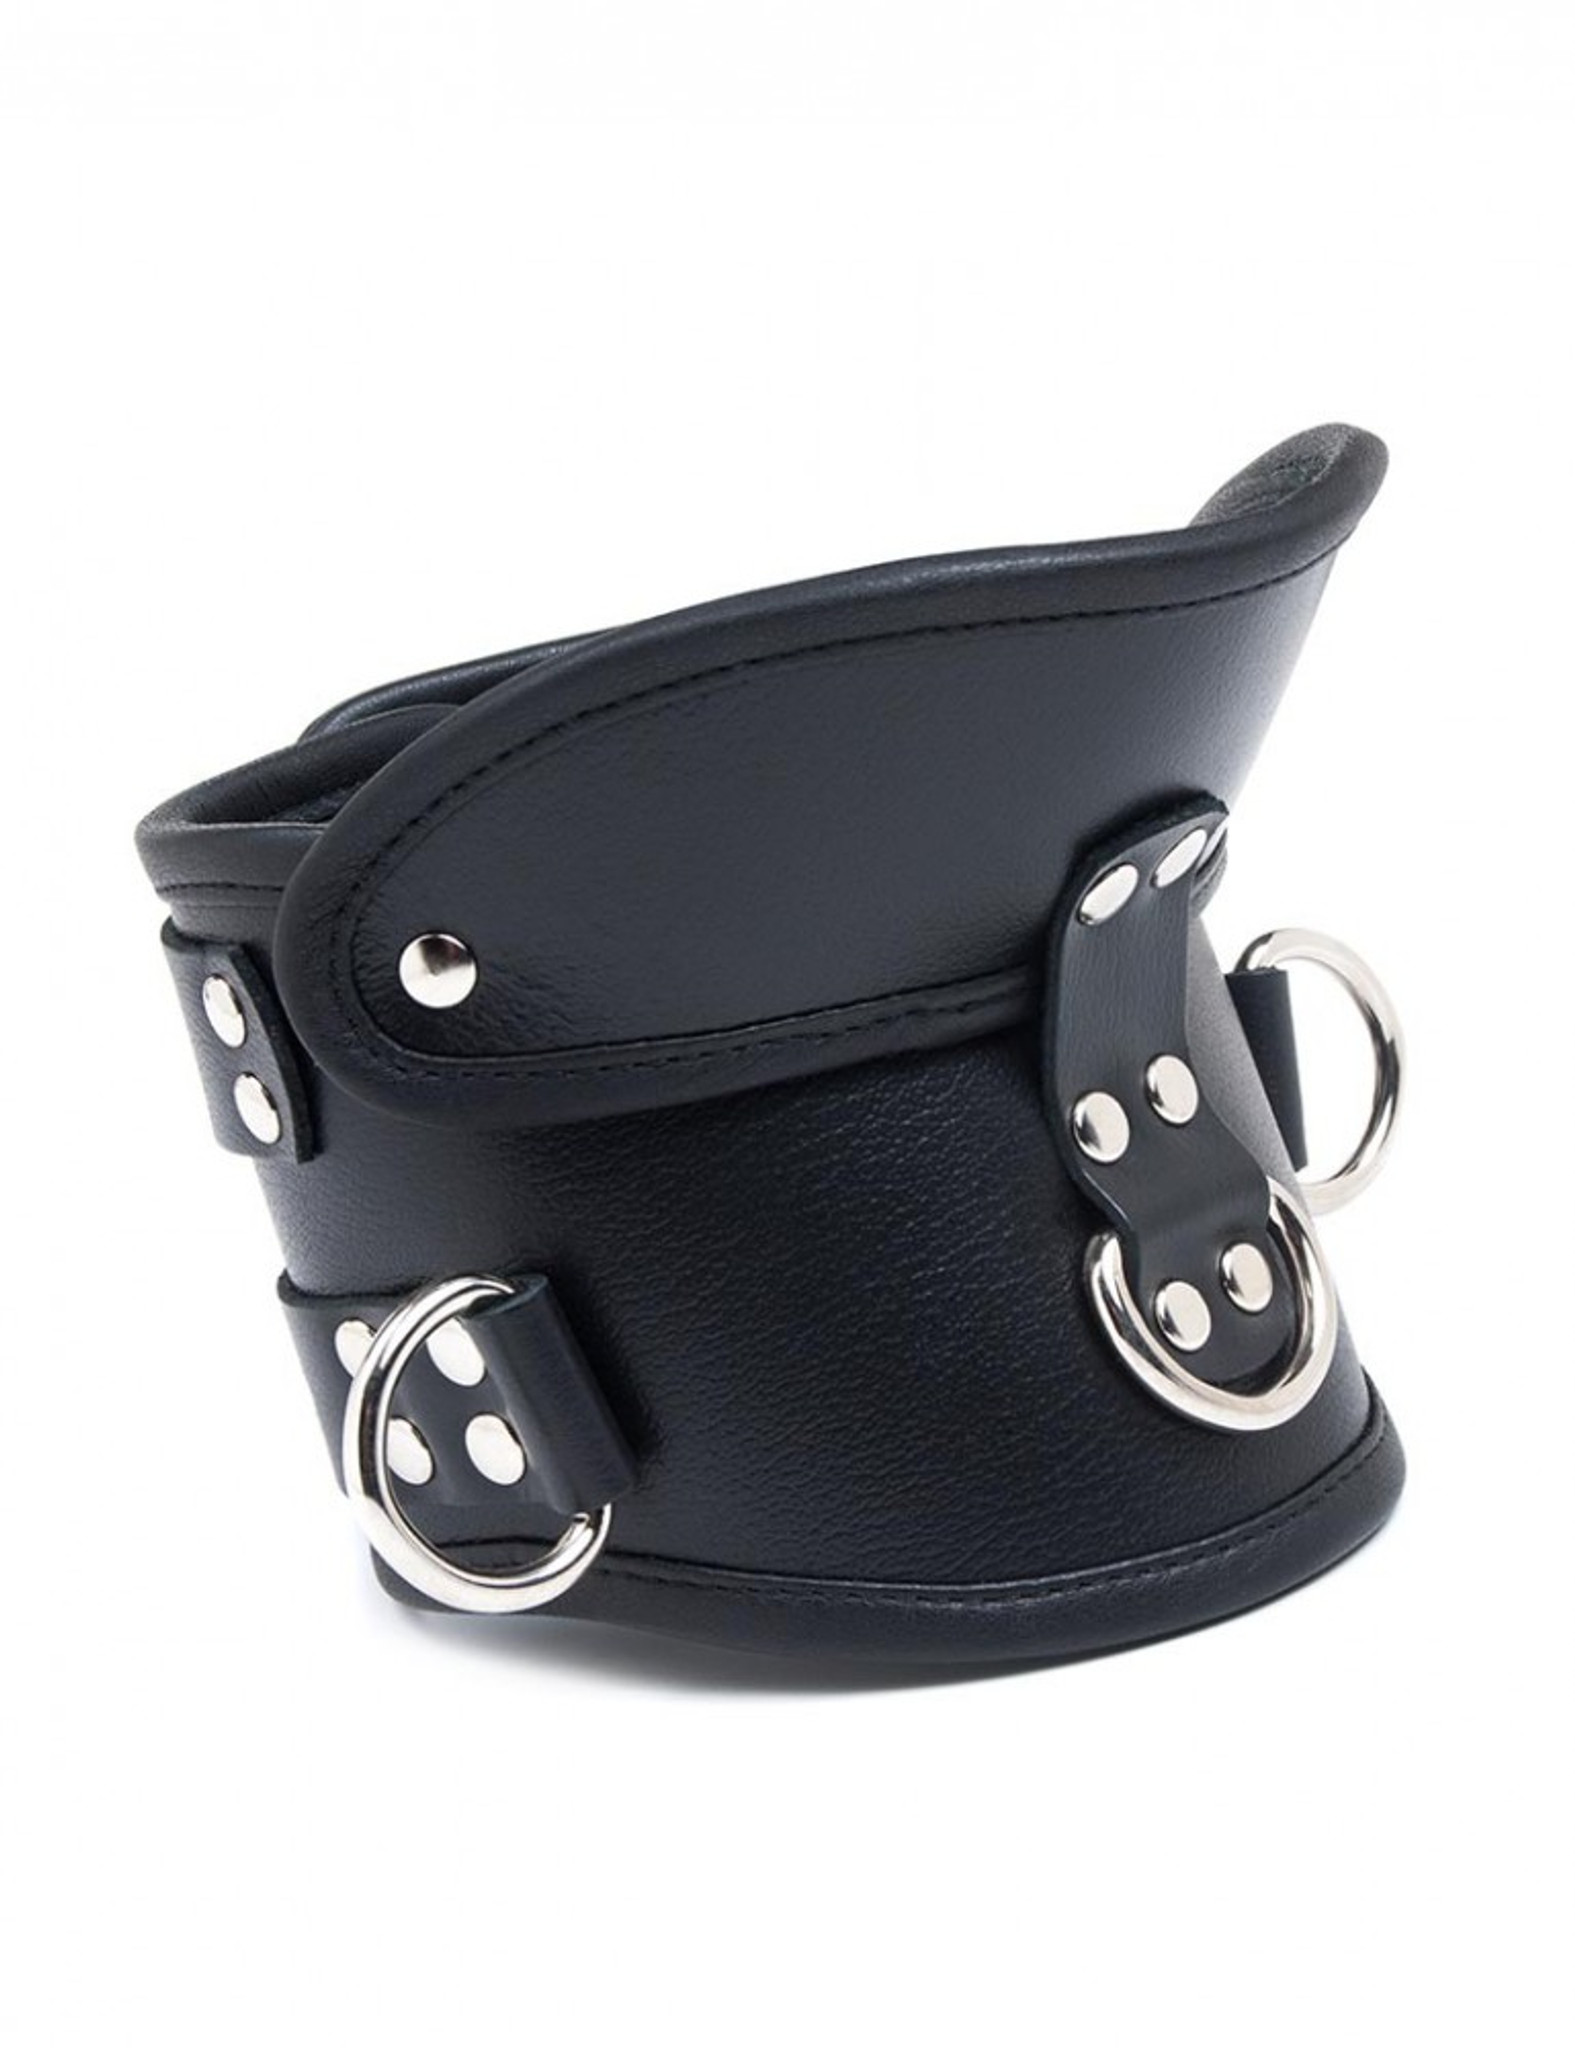 Adjustable Lockable Padded Leather Posture Collar with Padlock